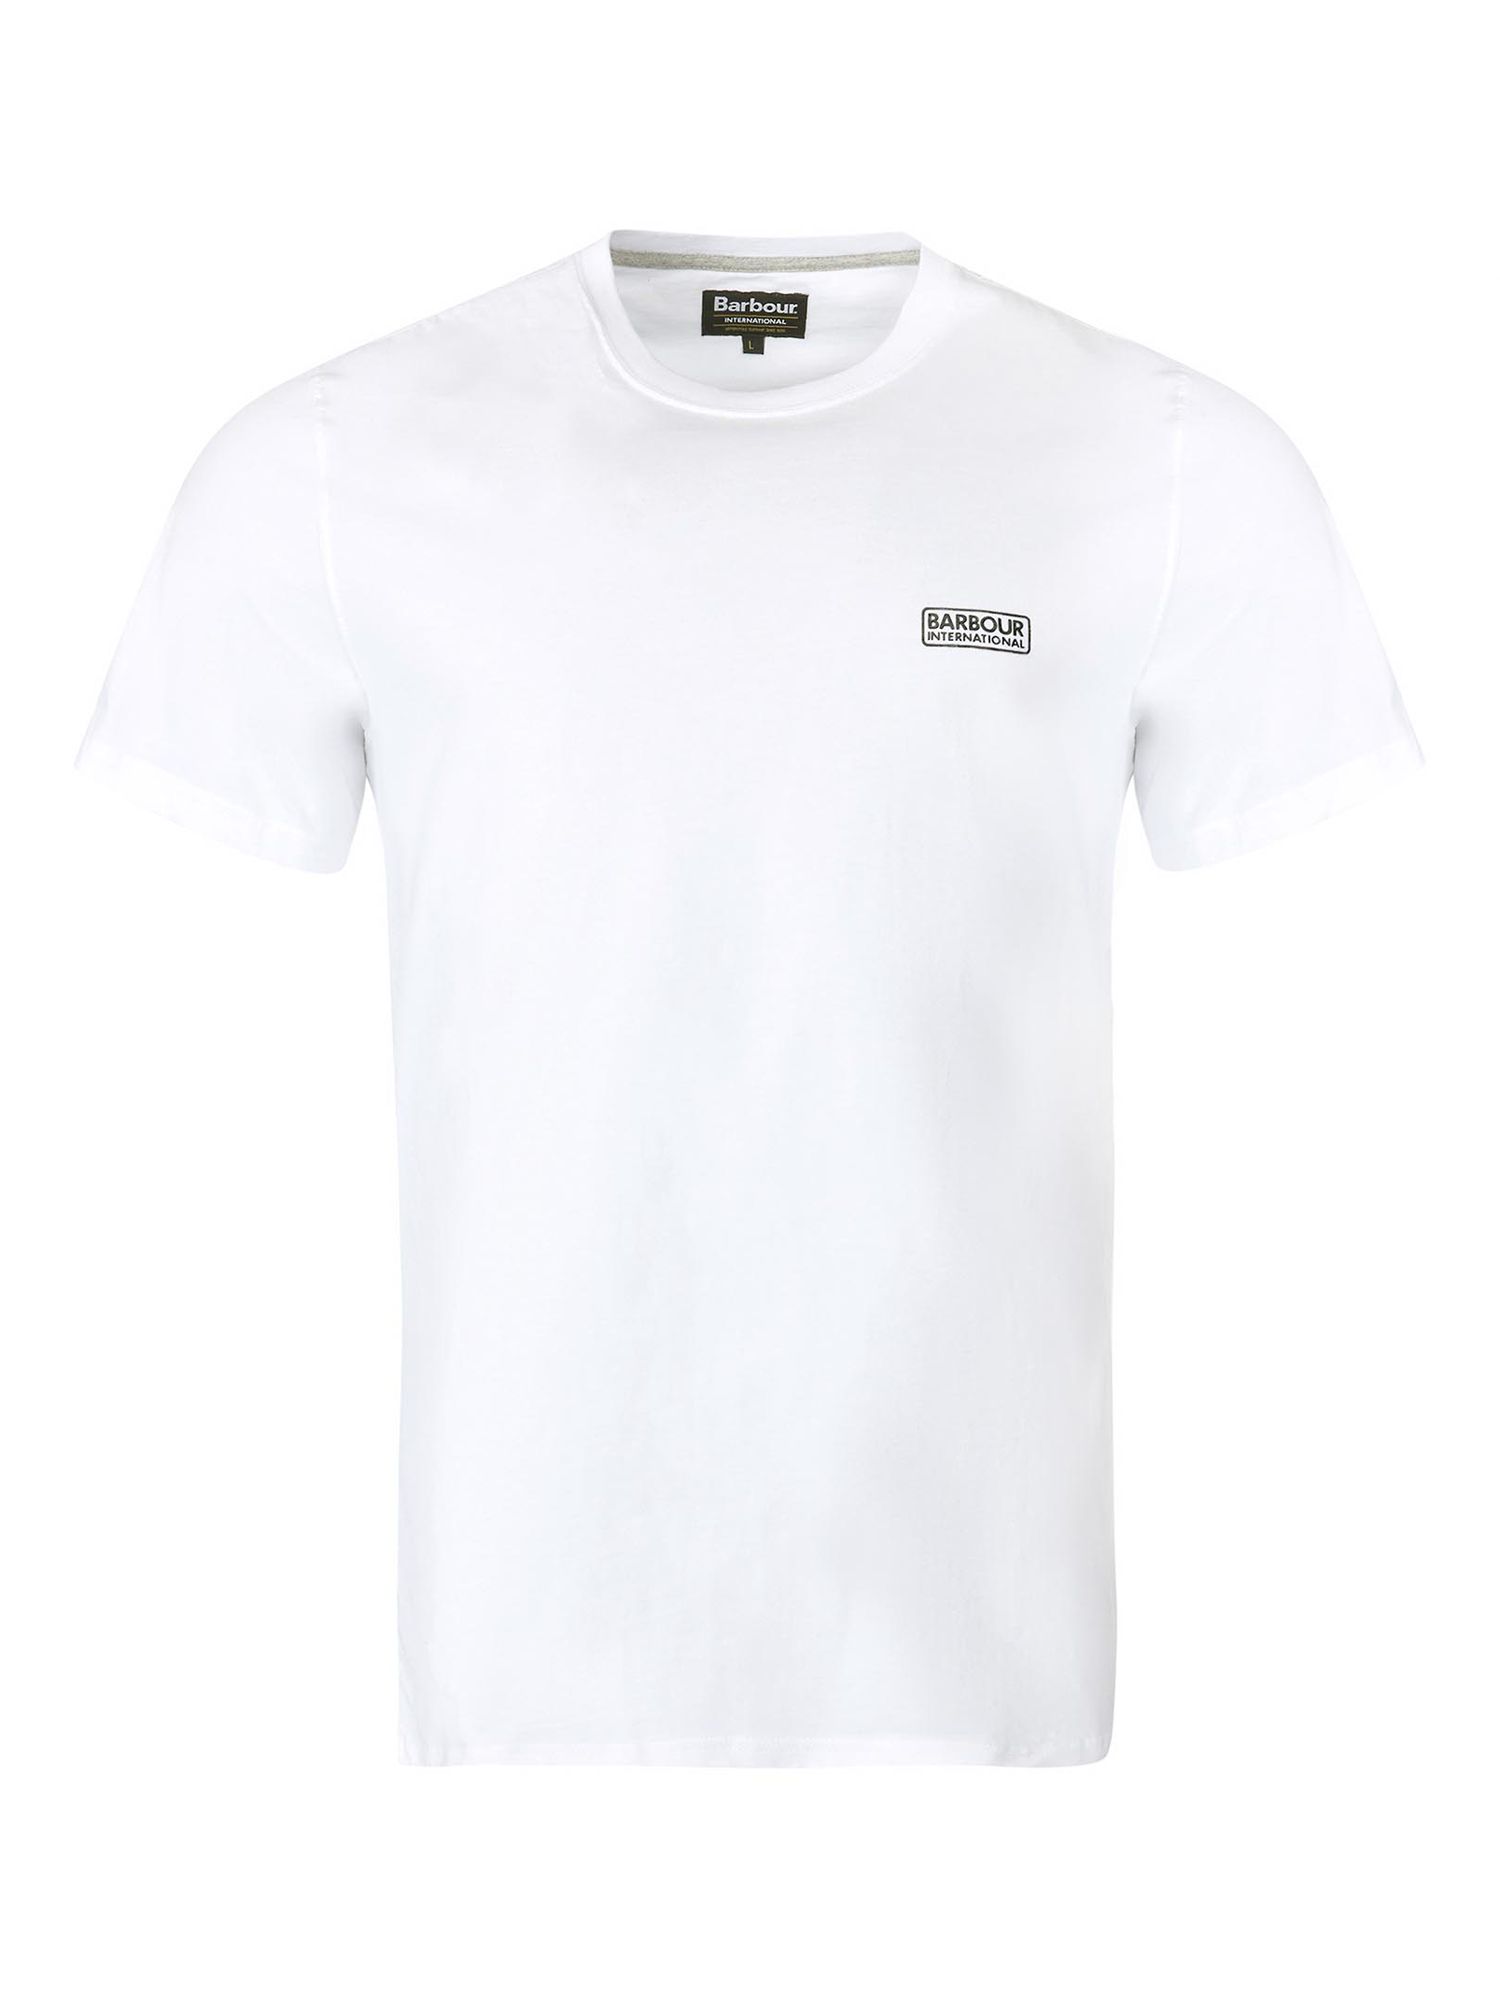 Barbour International Small Logo T-Shirt, White, XL